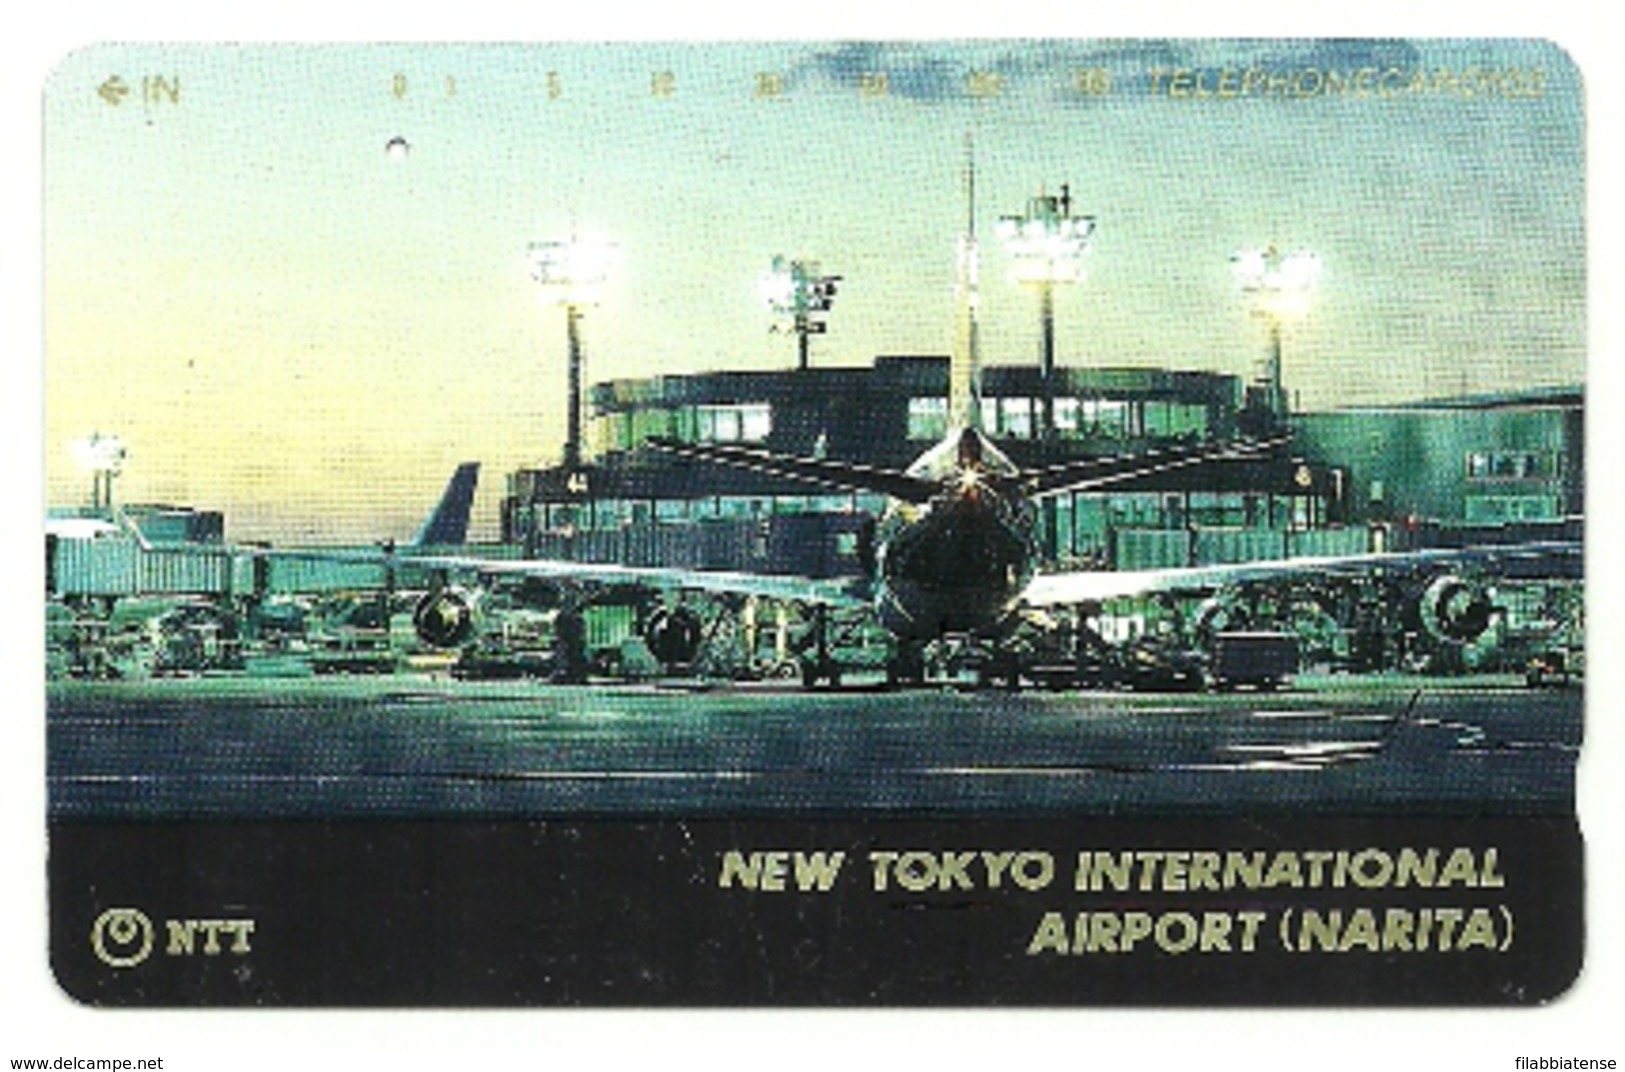 Giappone - Tessera Telefonica Da 105 Units T175 - NTT - Avions